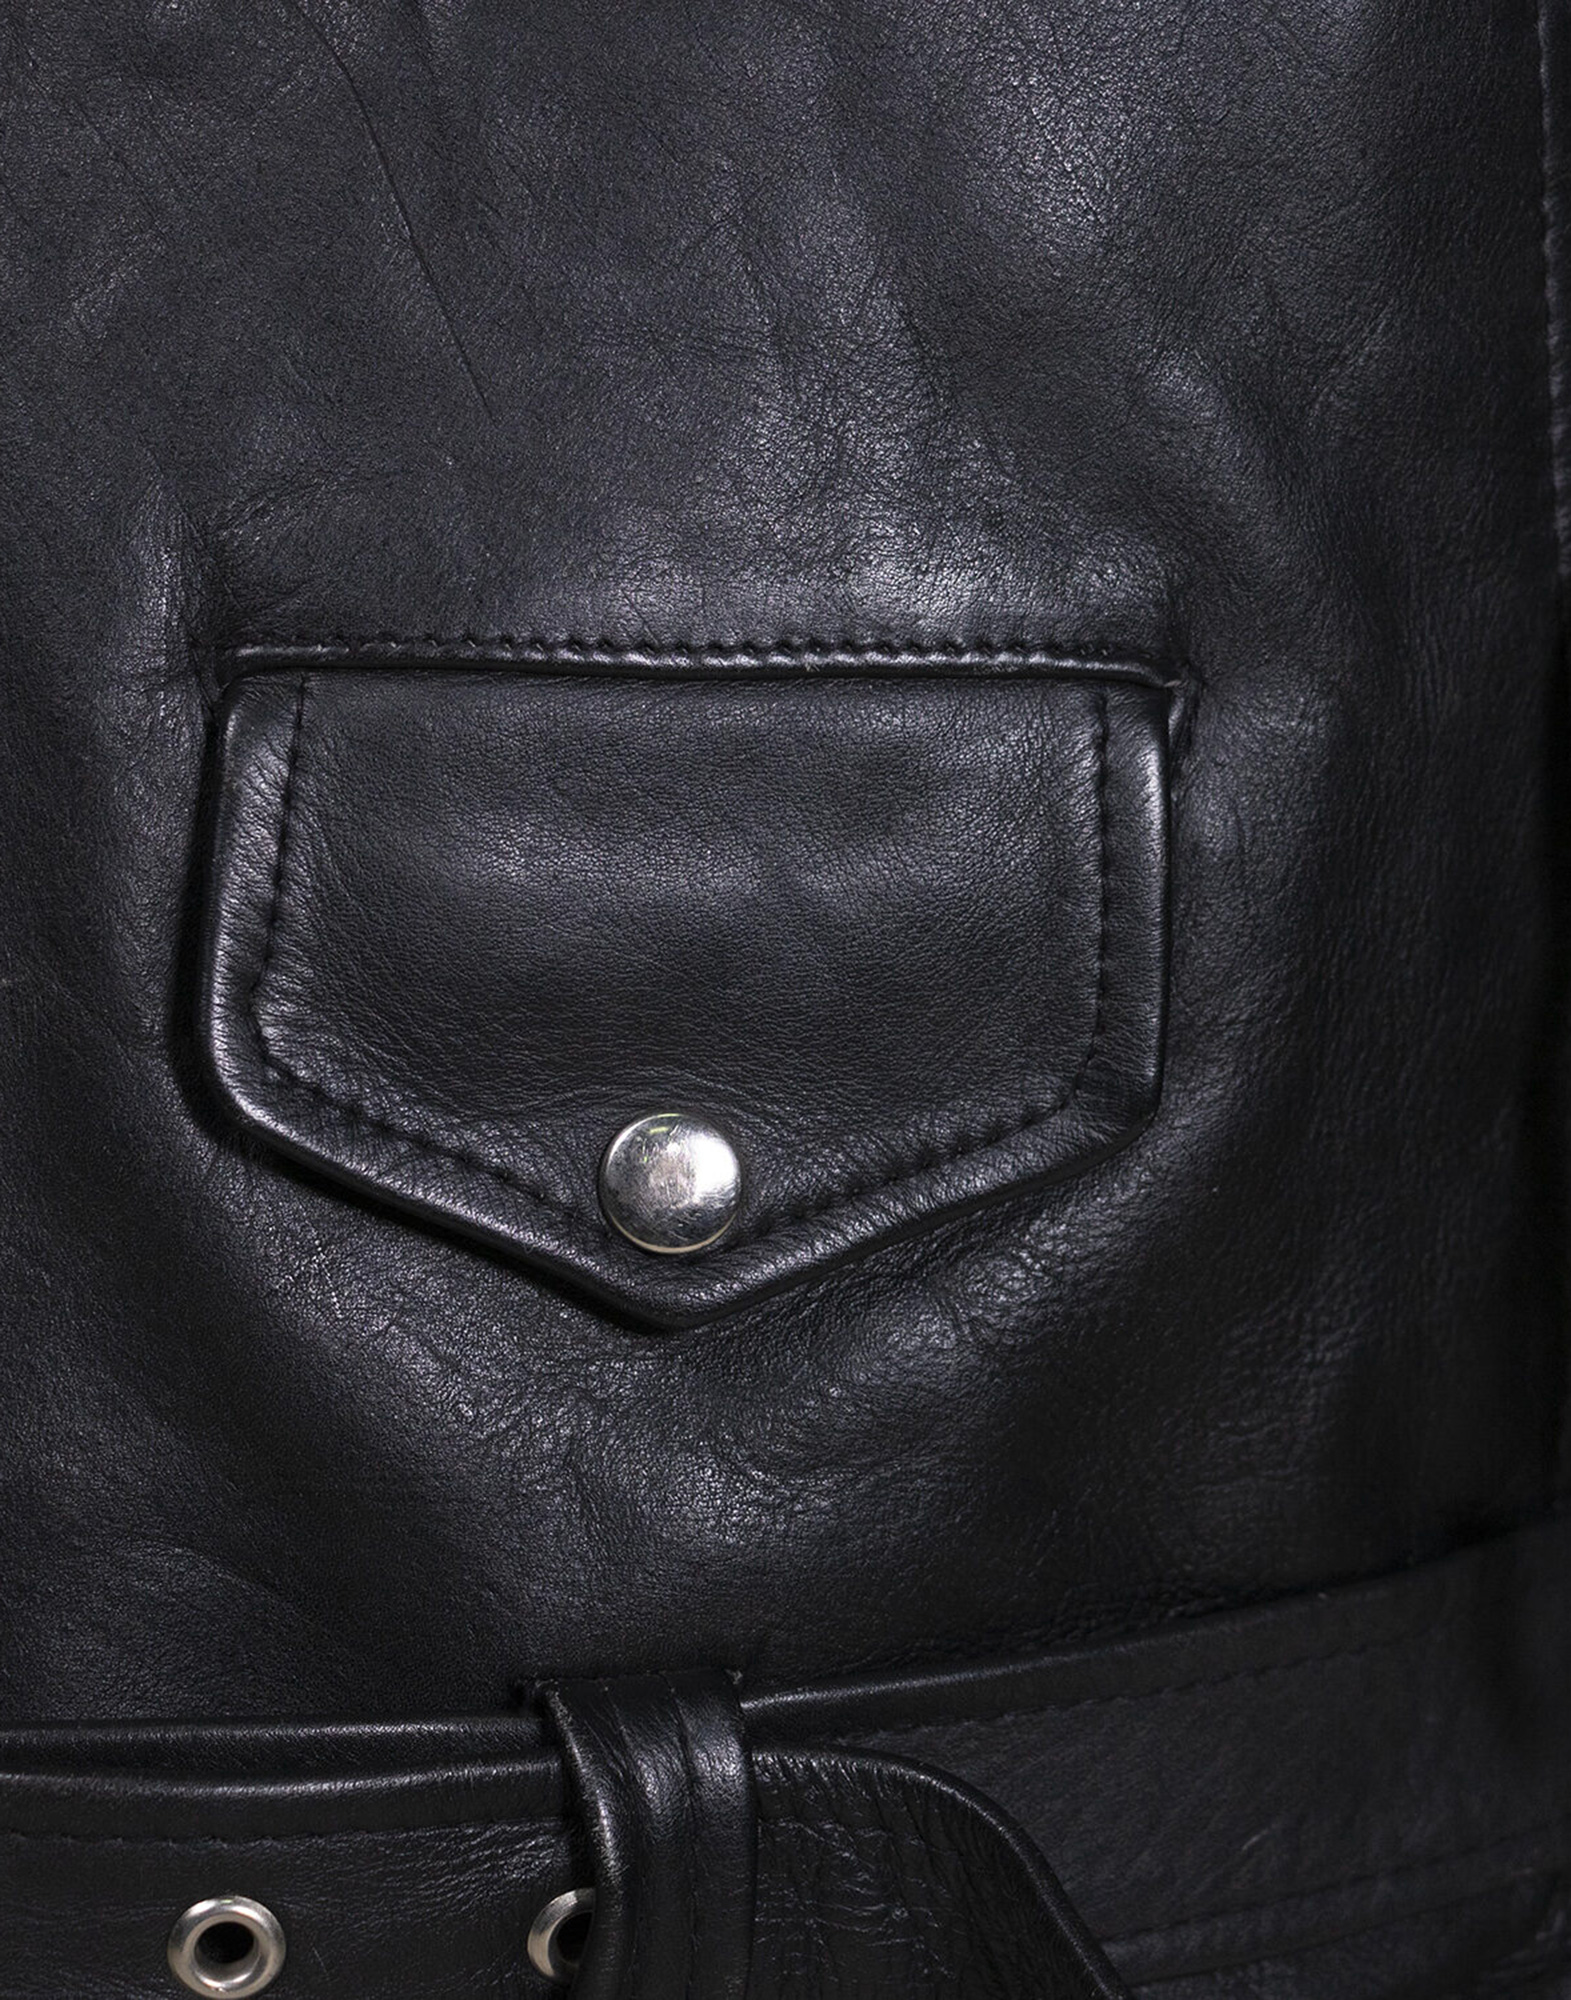 Vanguard Leather - Chiodo in pelle anni '80